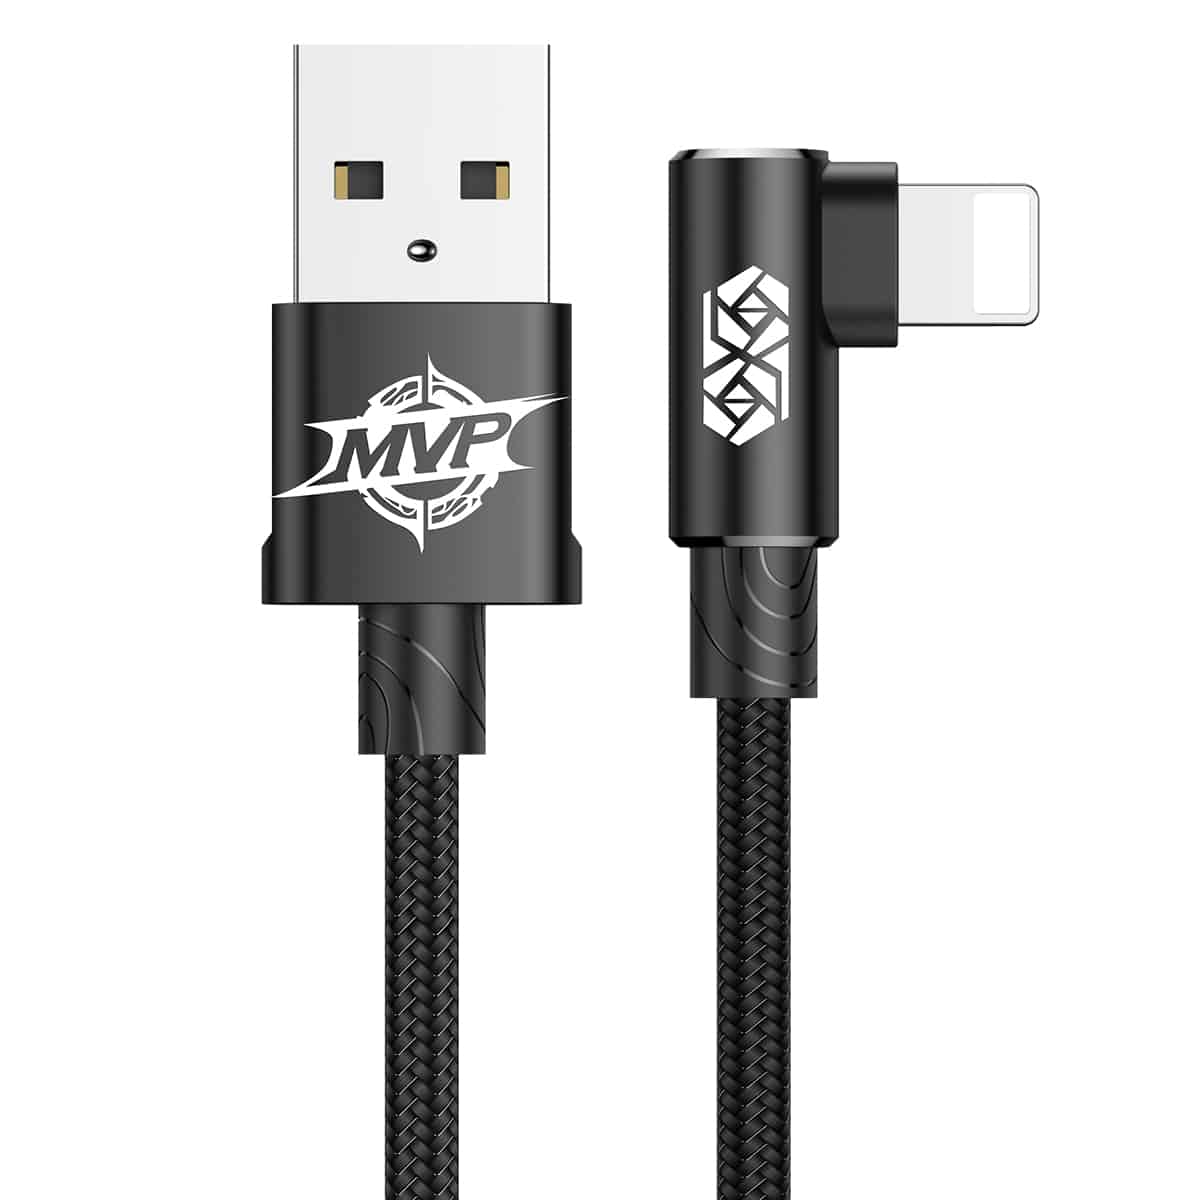 Cáp sạc Baseus MVP Elbow Type USB For Lightning 2A 